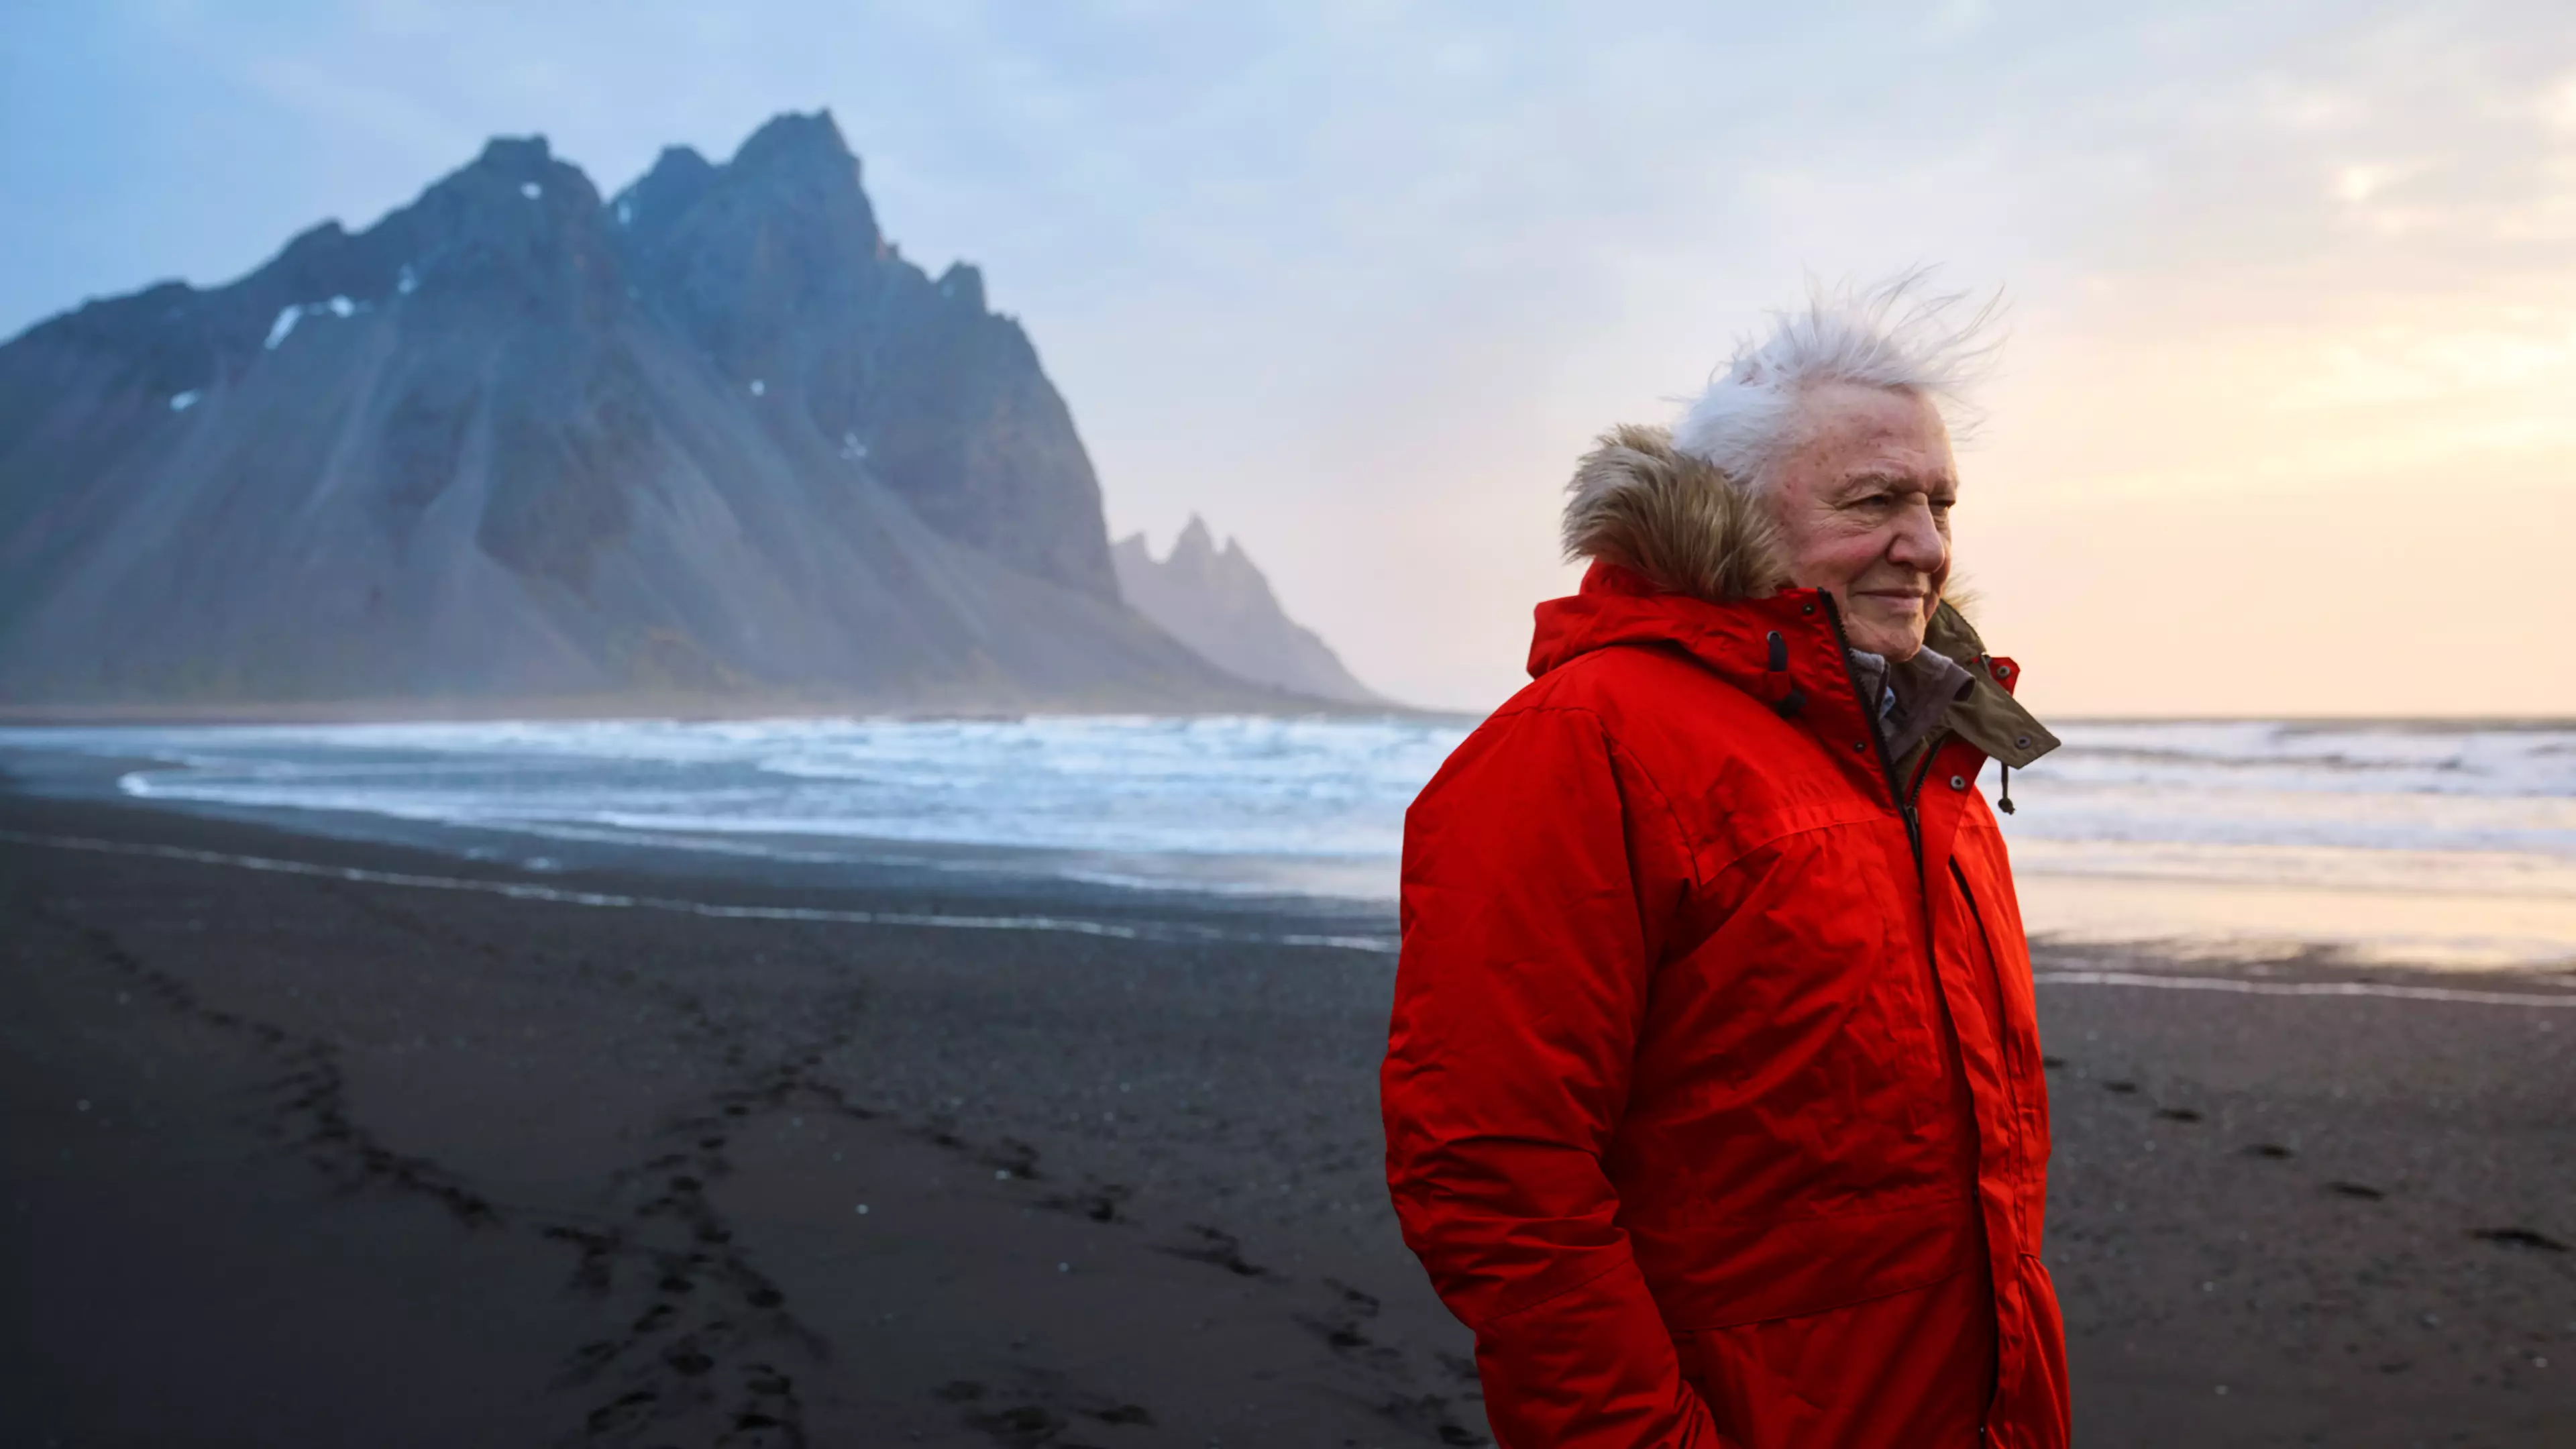 David Attenborough's New Show Starts Sunday - Here's Everything We Know